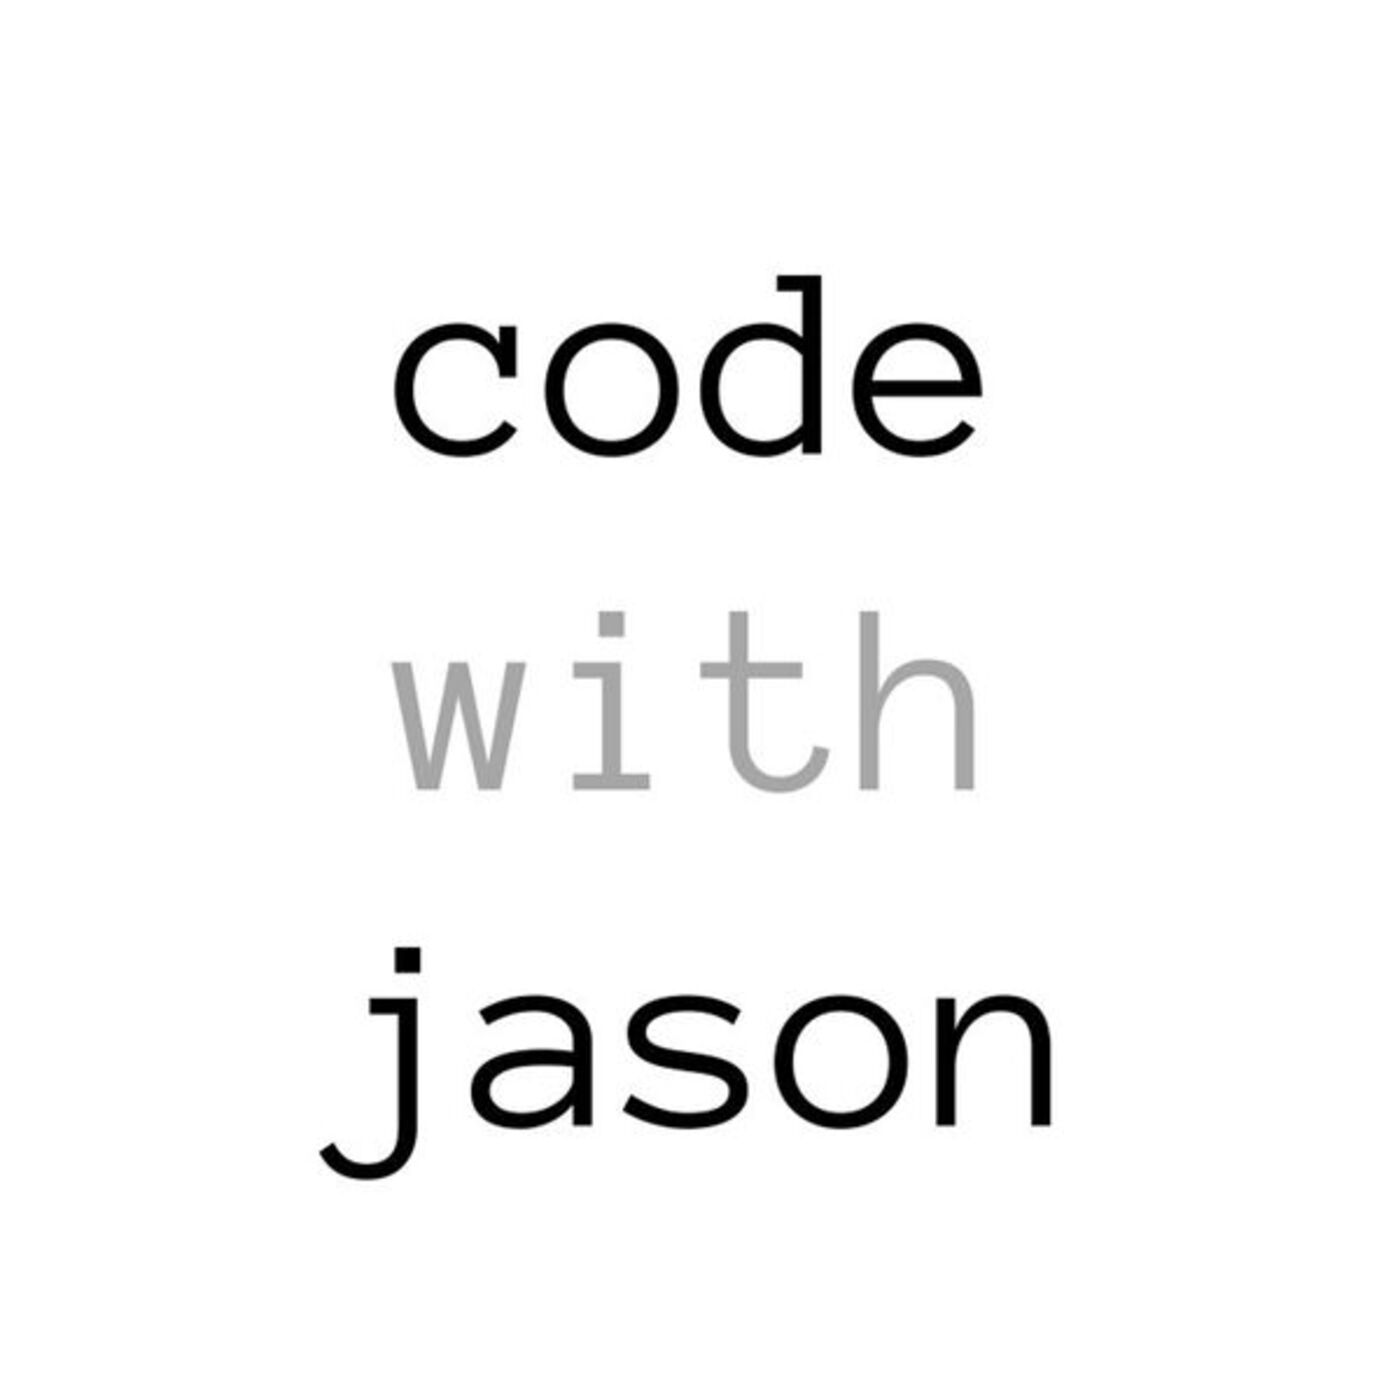 Code with Jason artwork